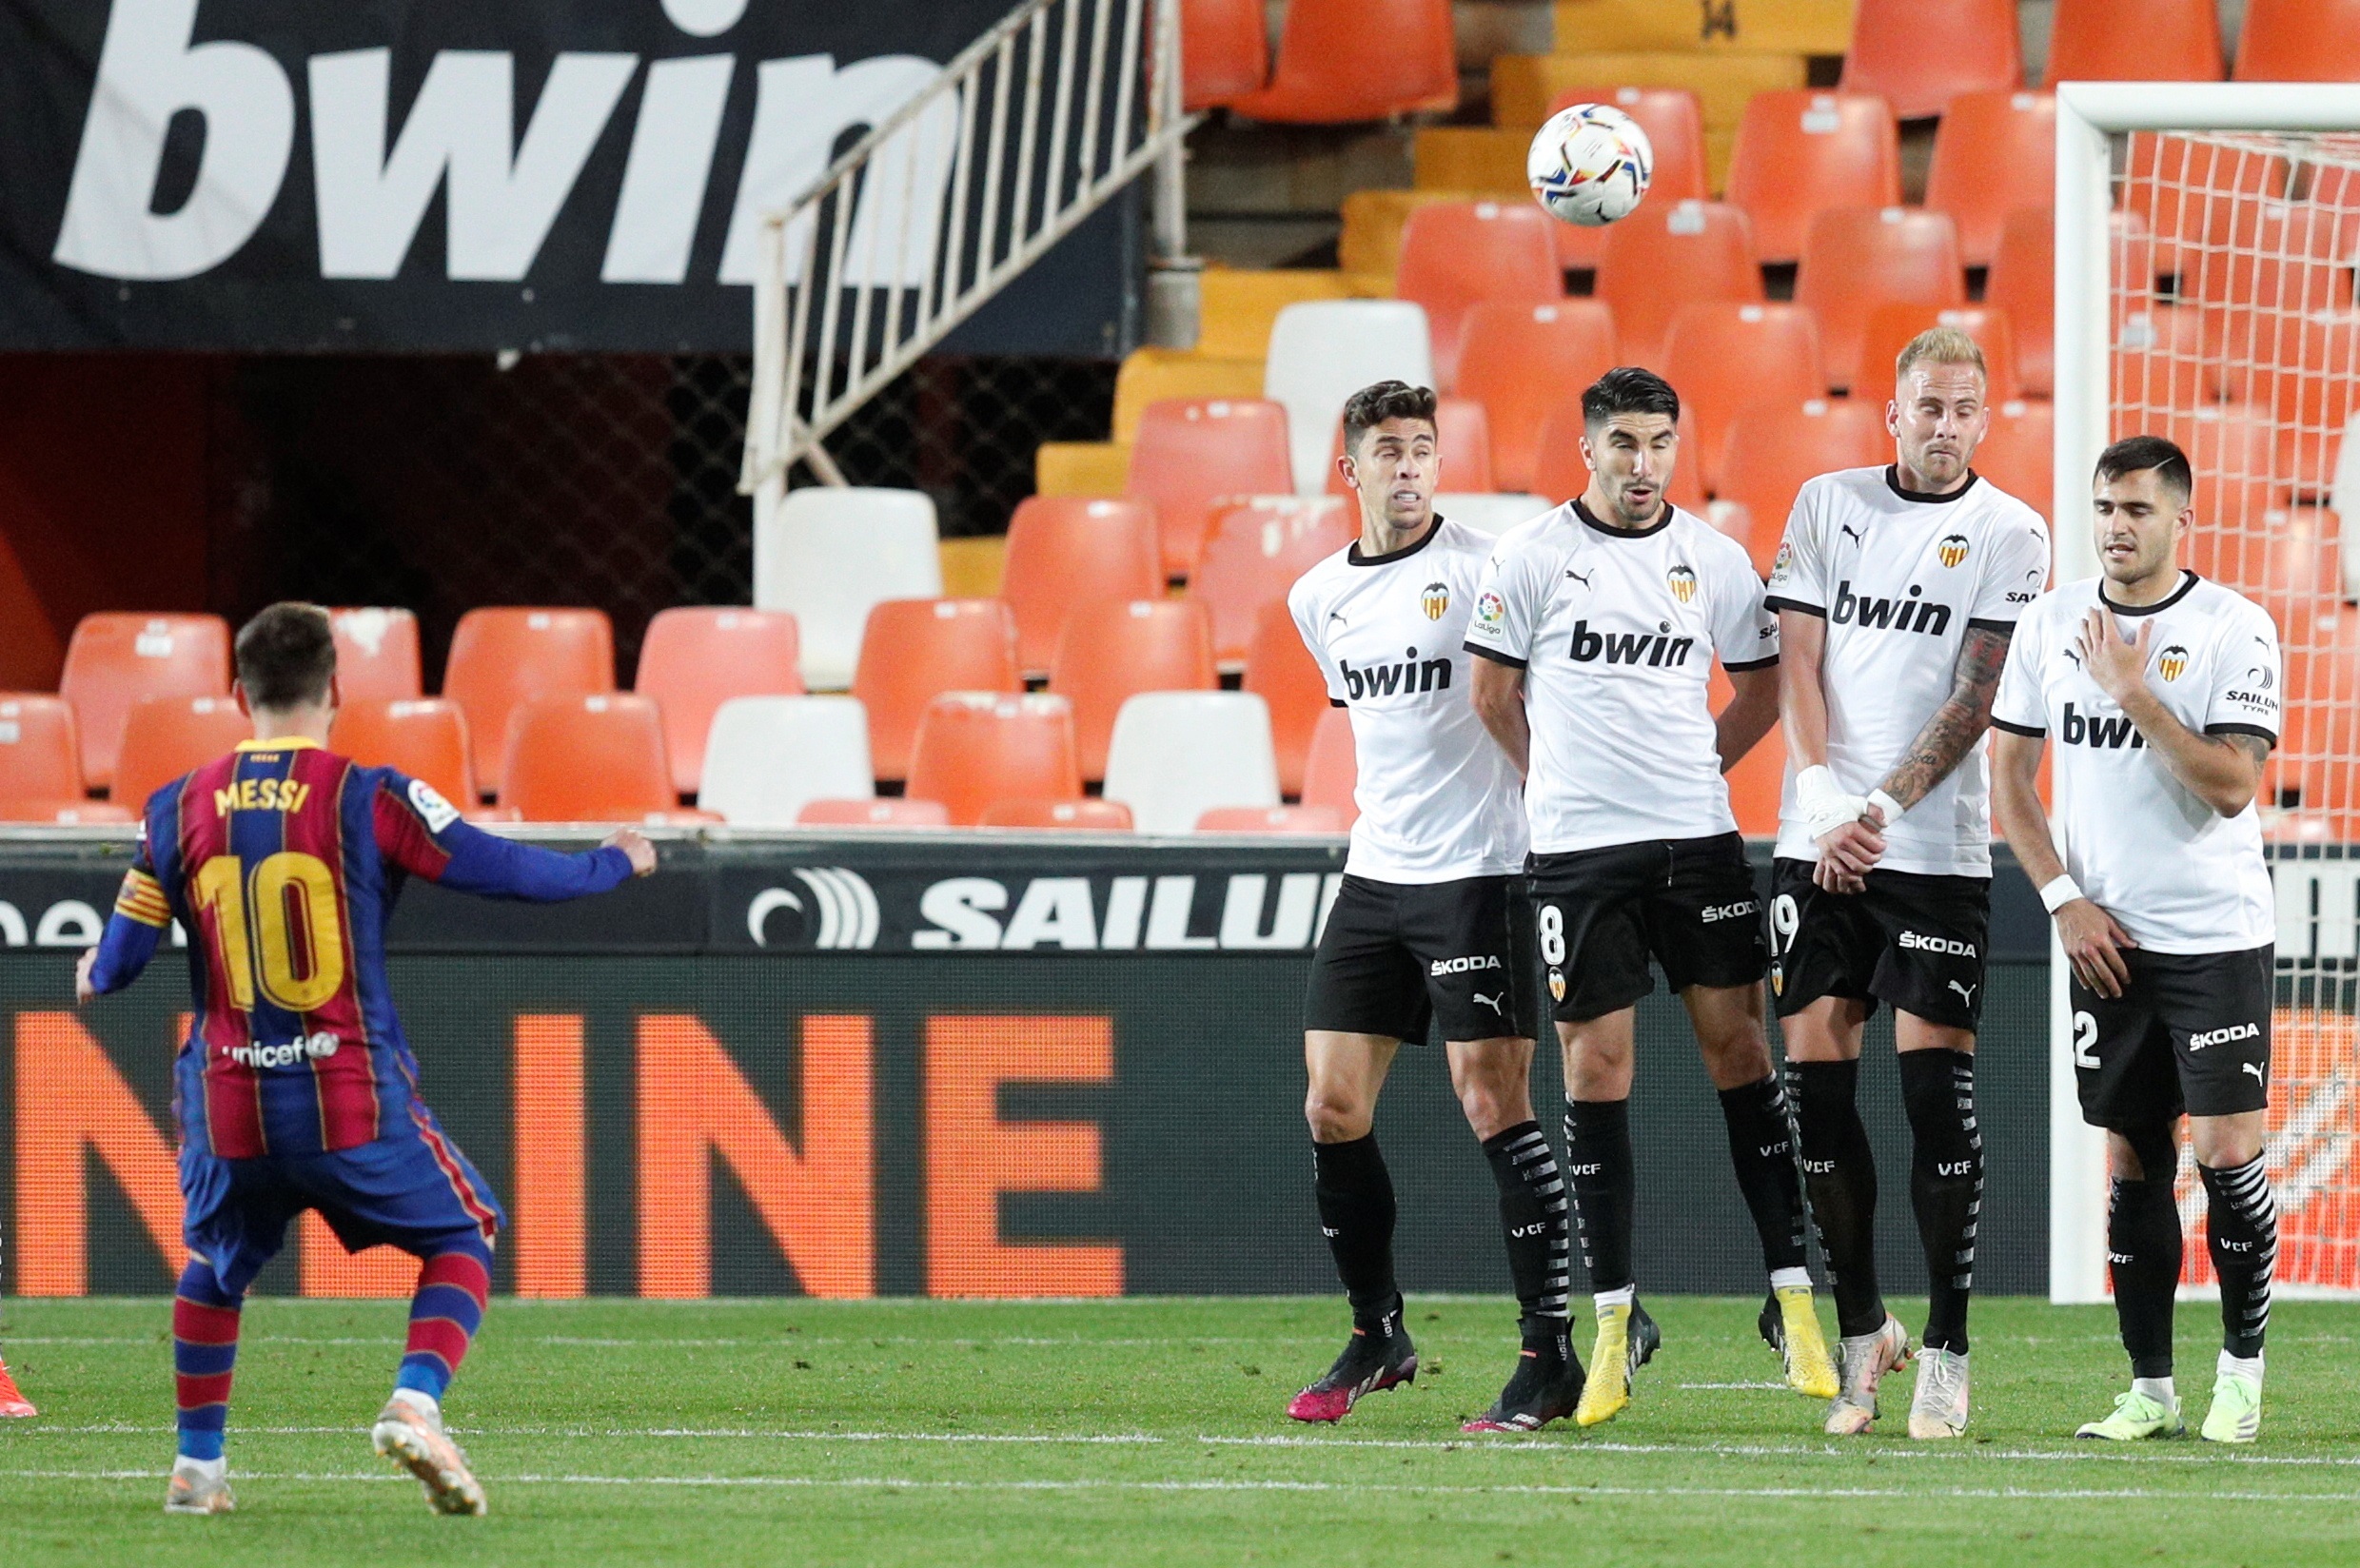 Messi en el momento que define de tiro libre el tercer gol del Barcelona contra el Valencia. (Foto Redes).